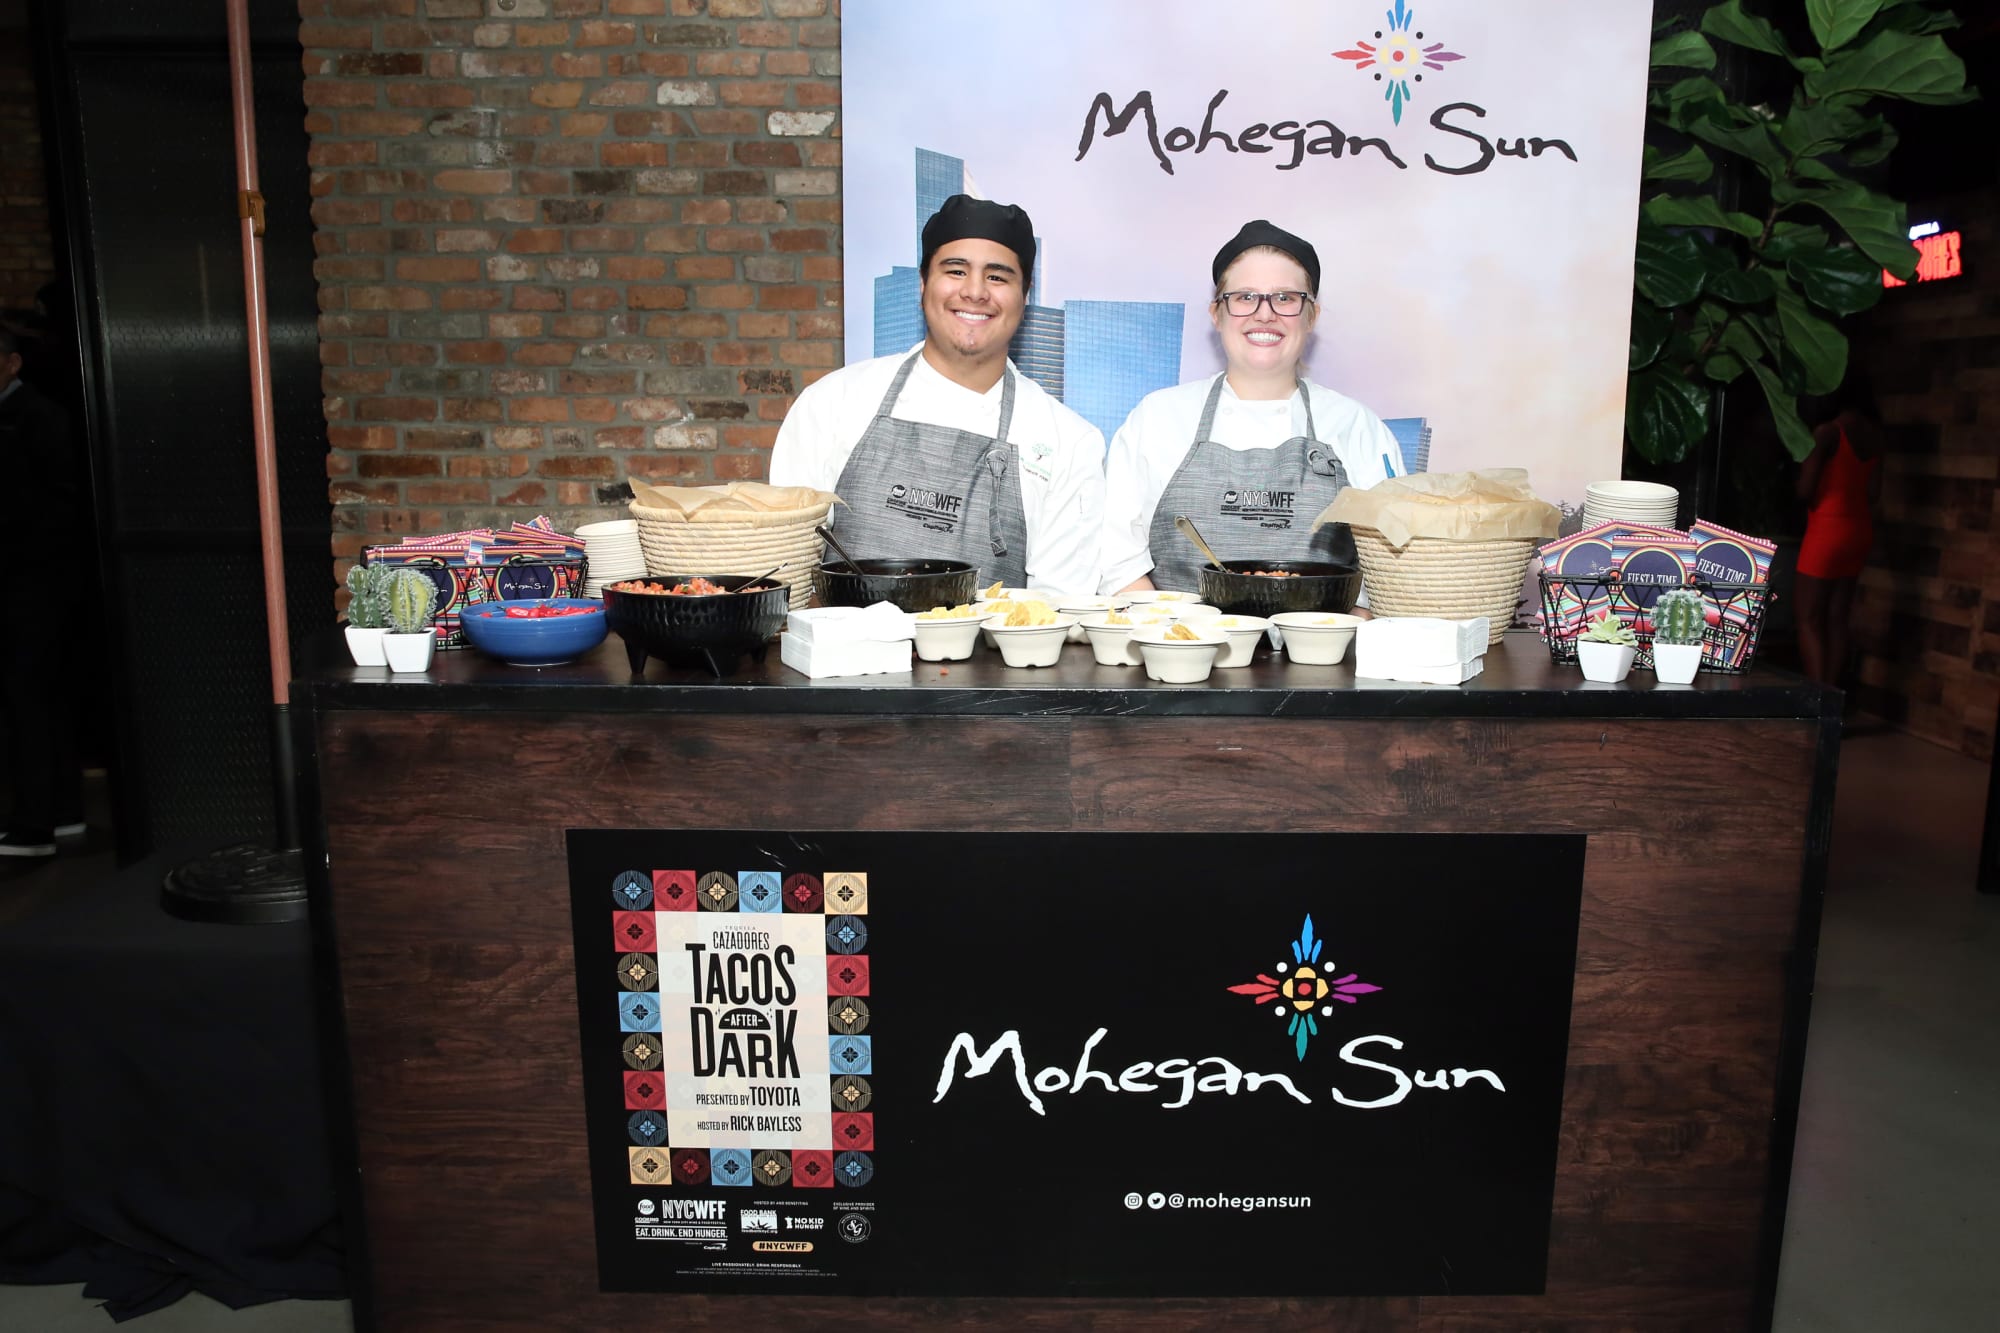 Mohegan Sun Wine and Food Festival 2022 kicks off the year